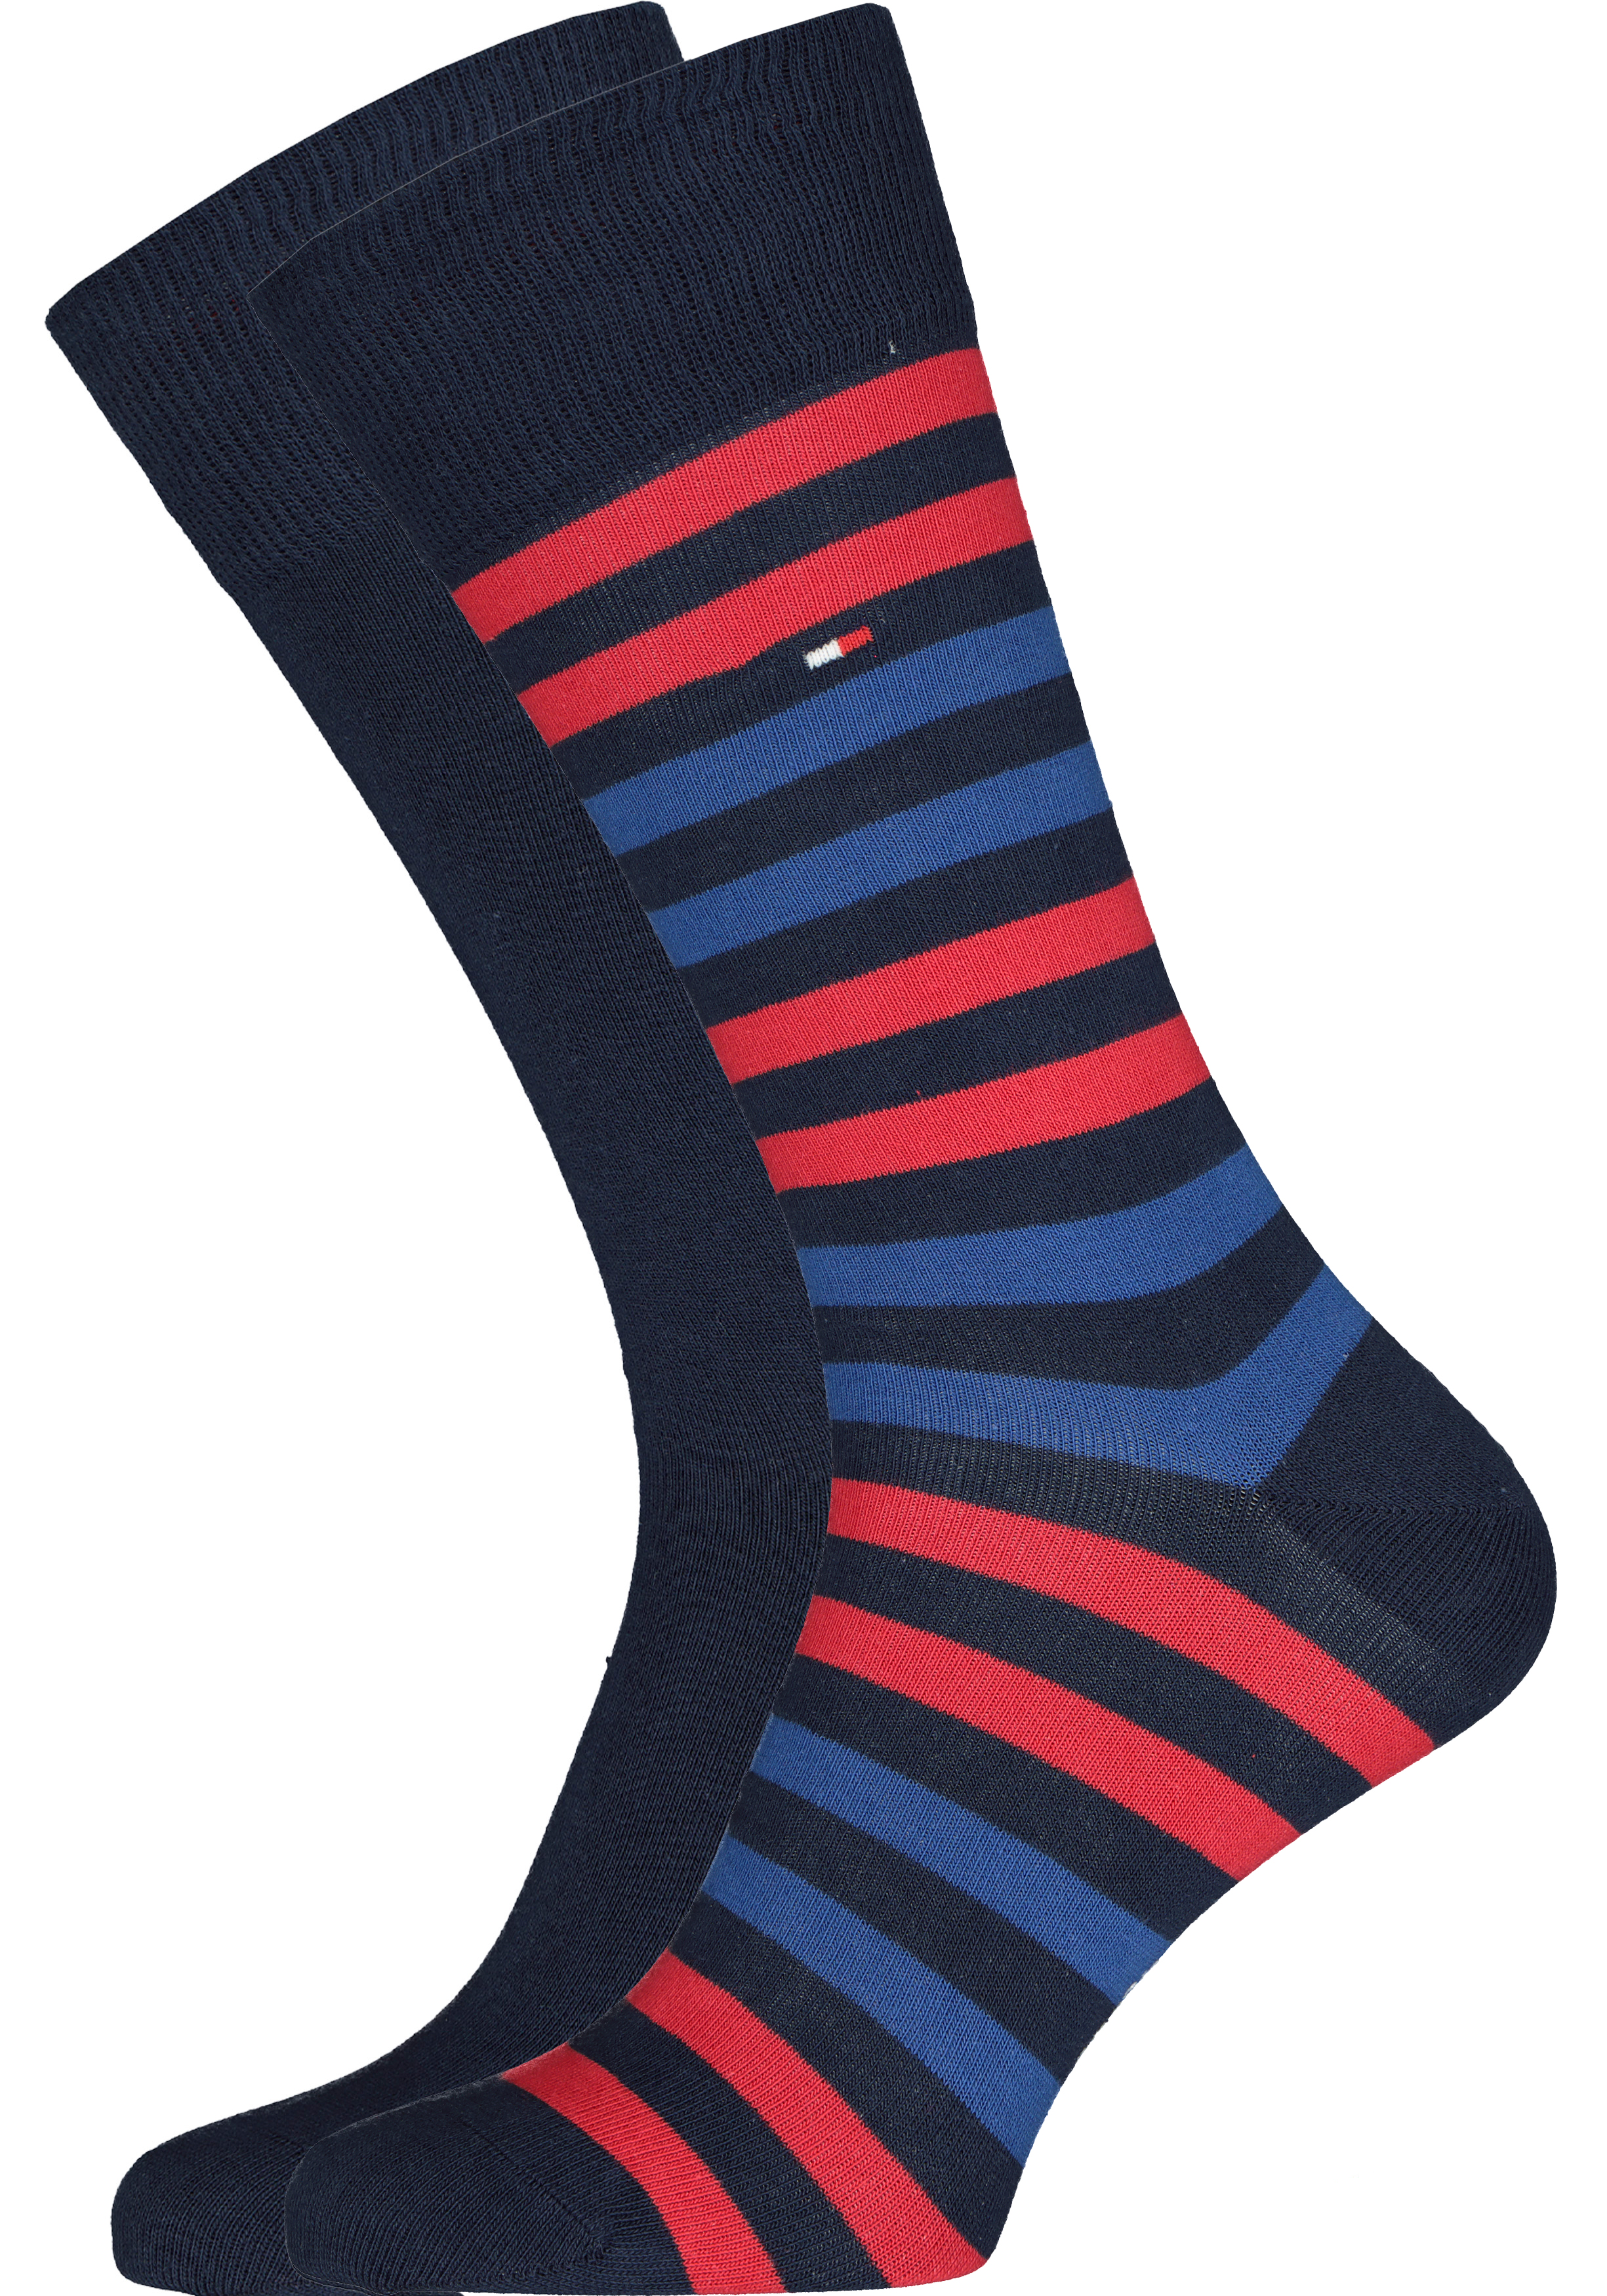 Tommy Hilfiger Duo Stripe Socks (2-pack), herensokken katoen, gestreept en uni, blauw en rood